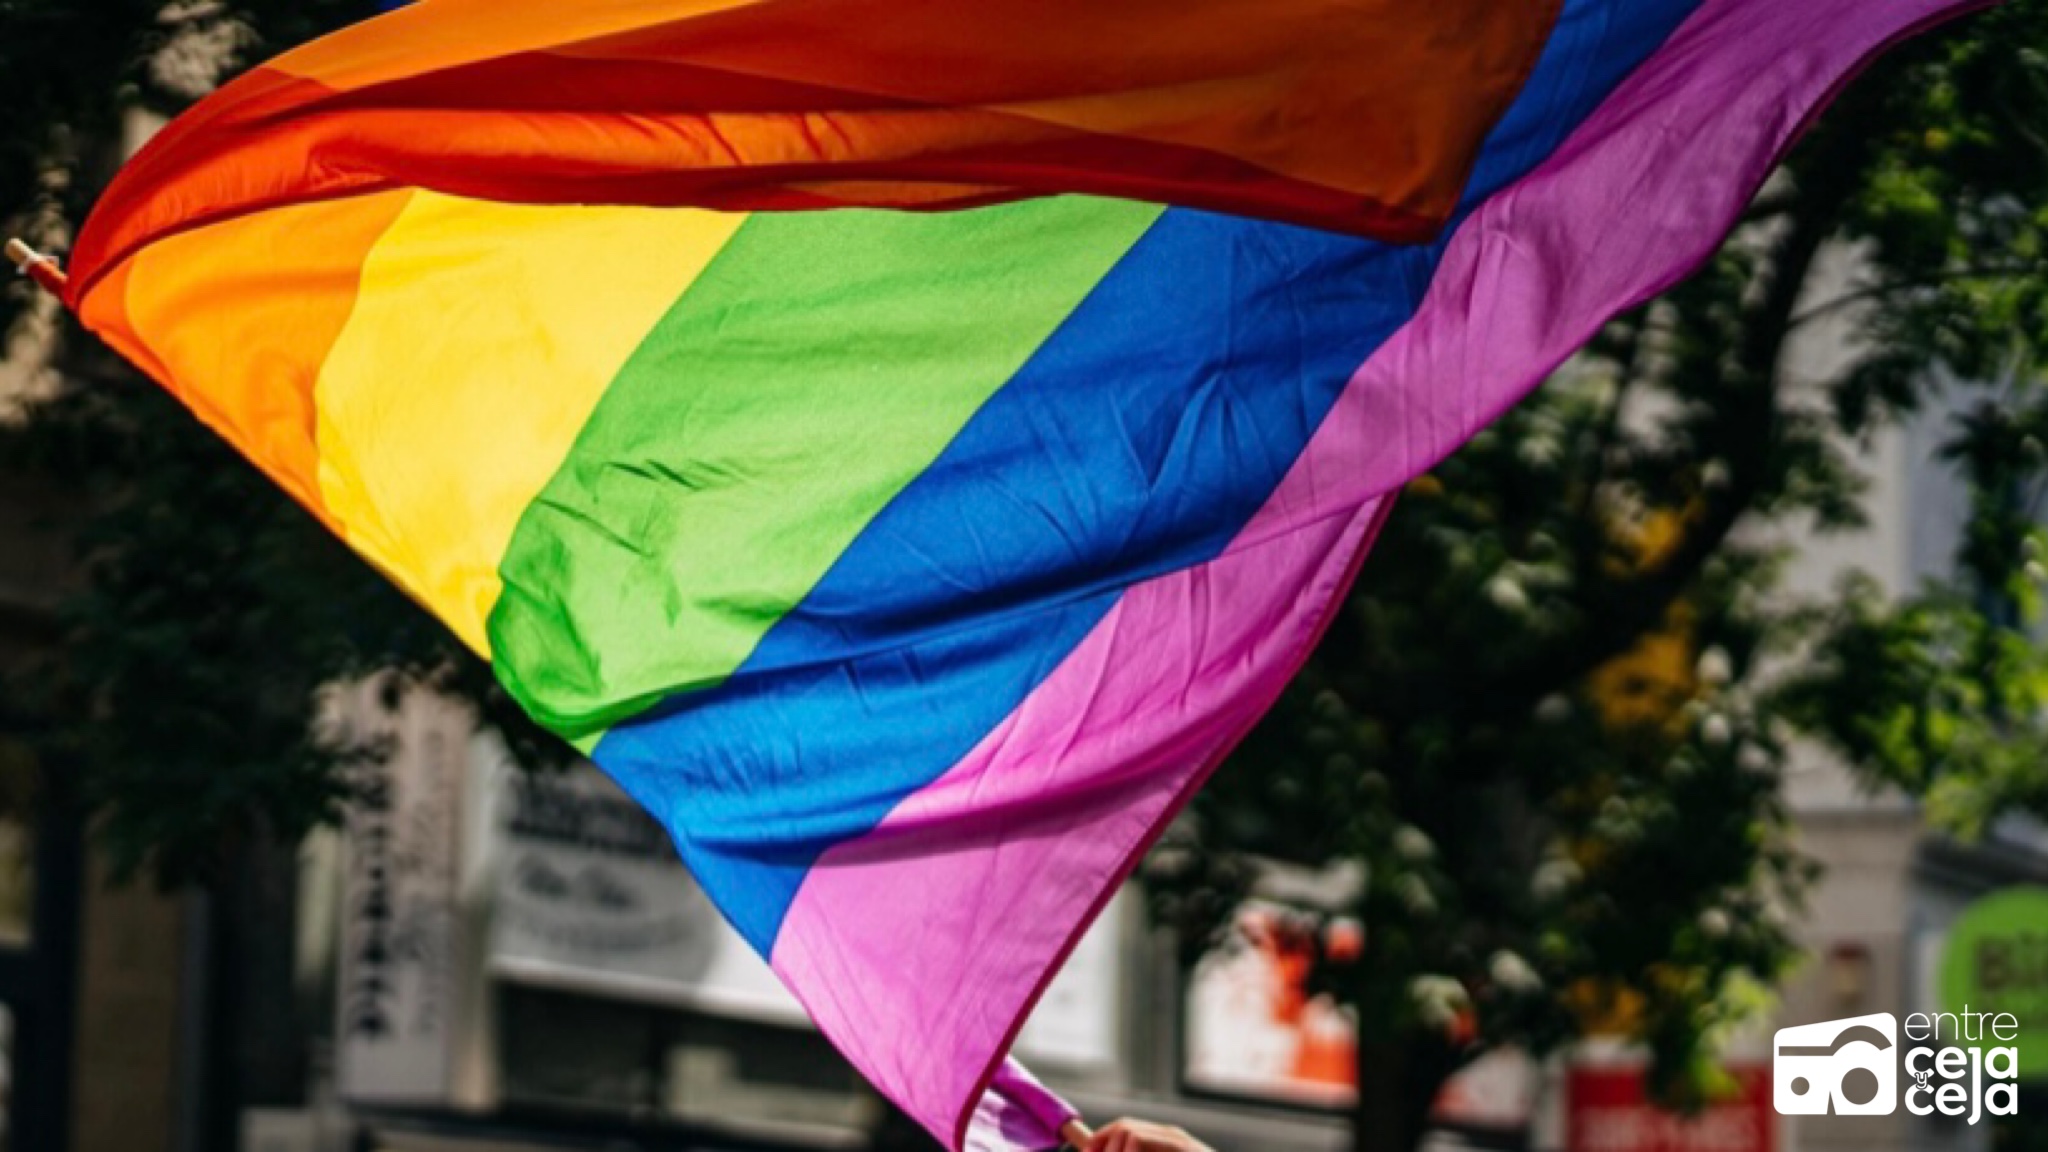 “Amor es amor”, el lema del Día Internacional del Orgullo LGBTIQ+